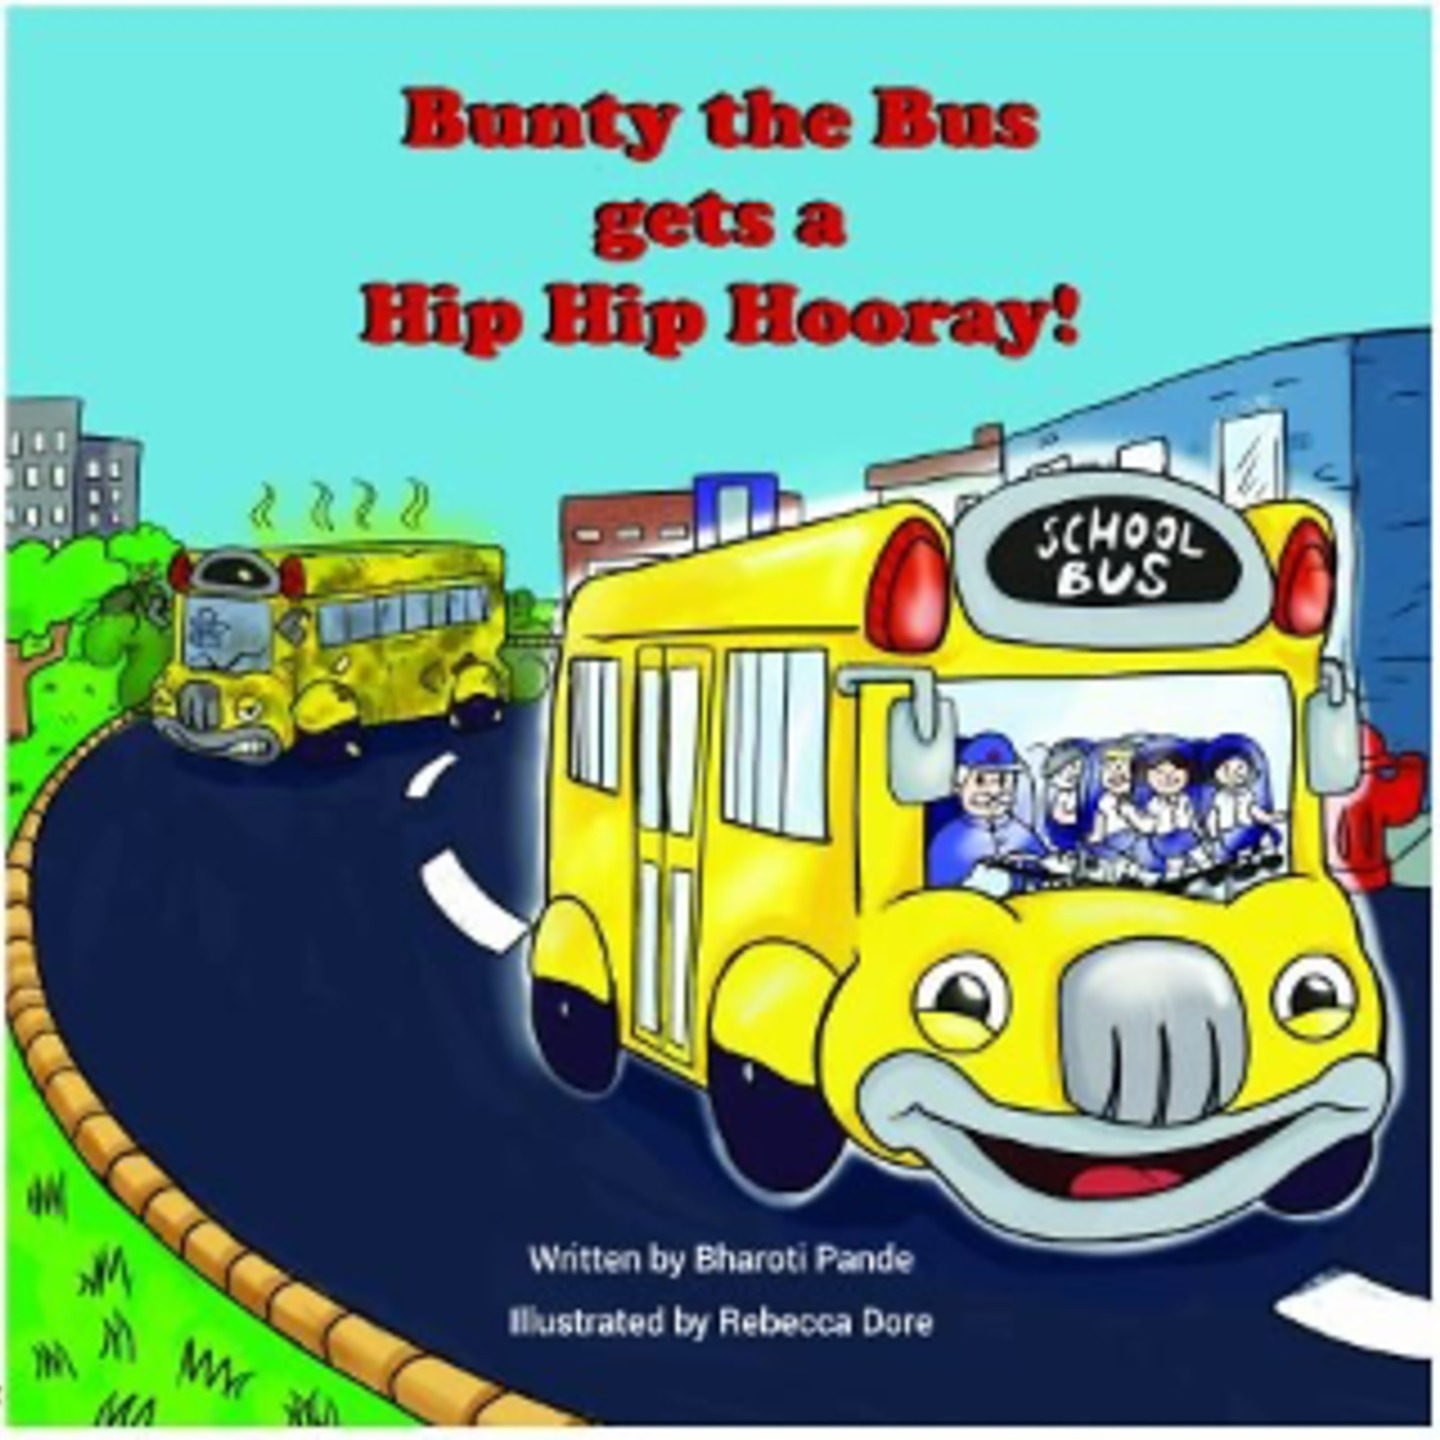 Bunty the Bus gets a Hip Hip Hooray! by Bharoti Pande